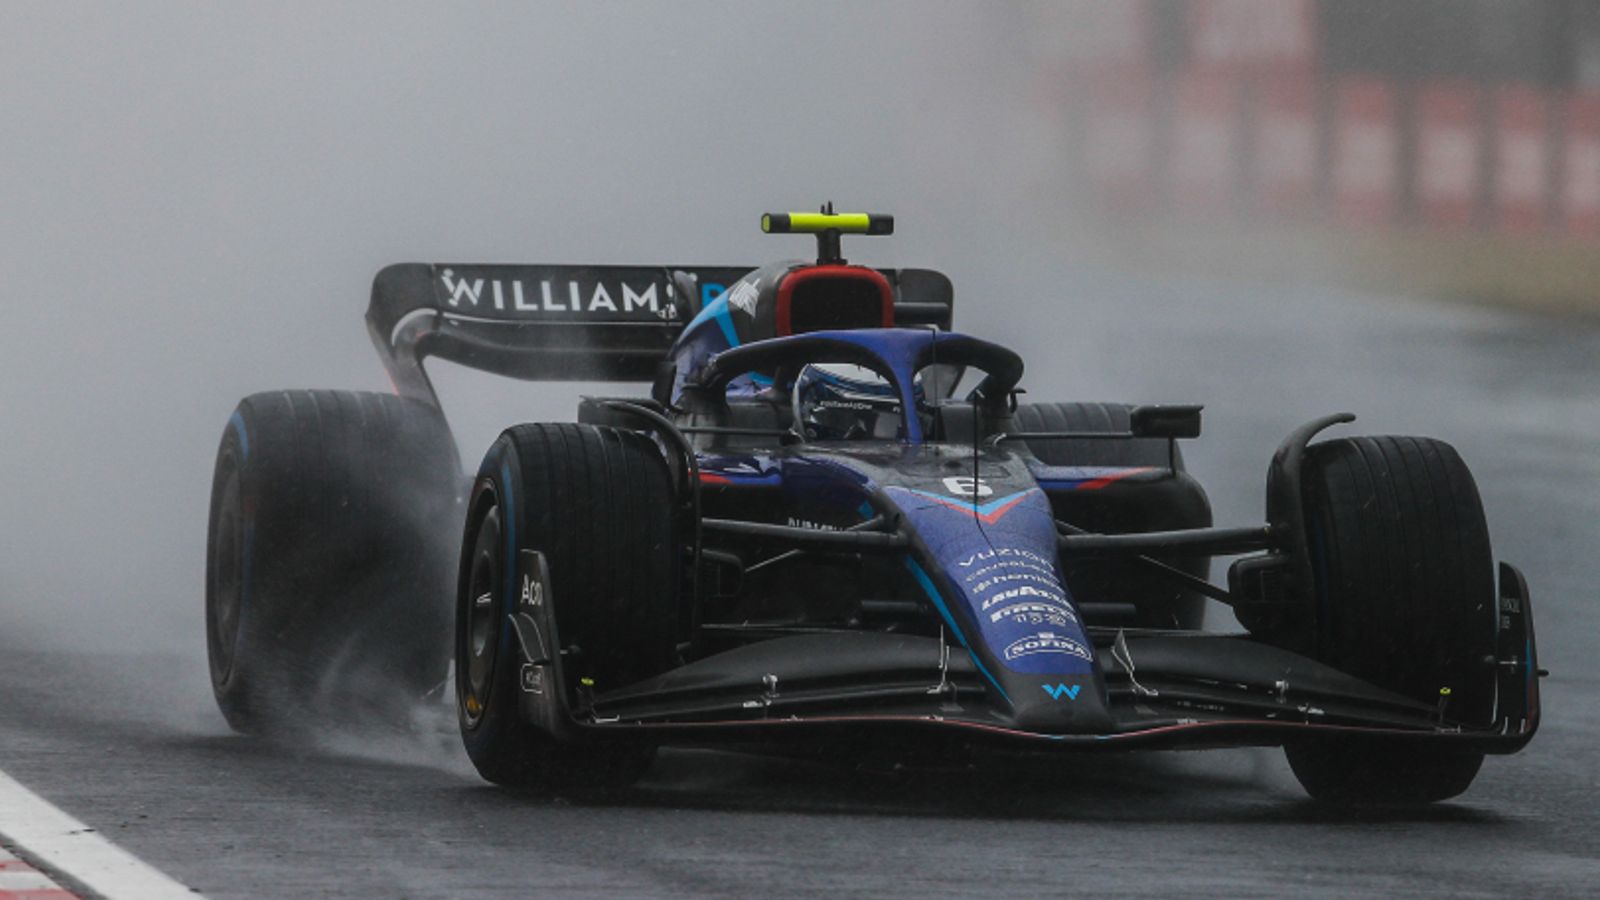 Hungarian GP: Nicholas Latifi fastest for Williams in wet Practice Three ahead of qualifying